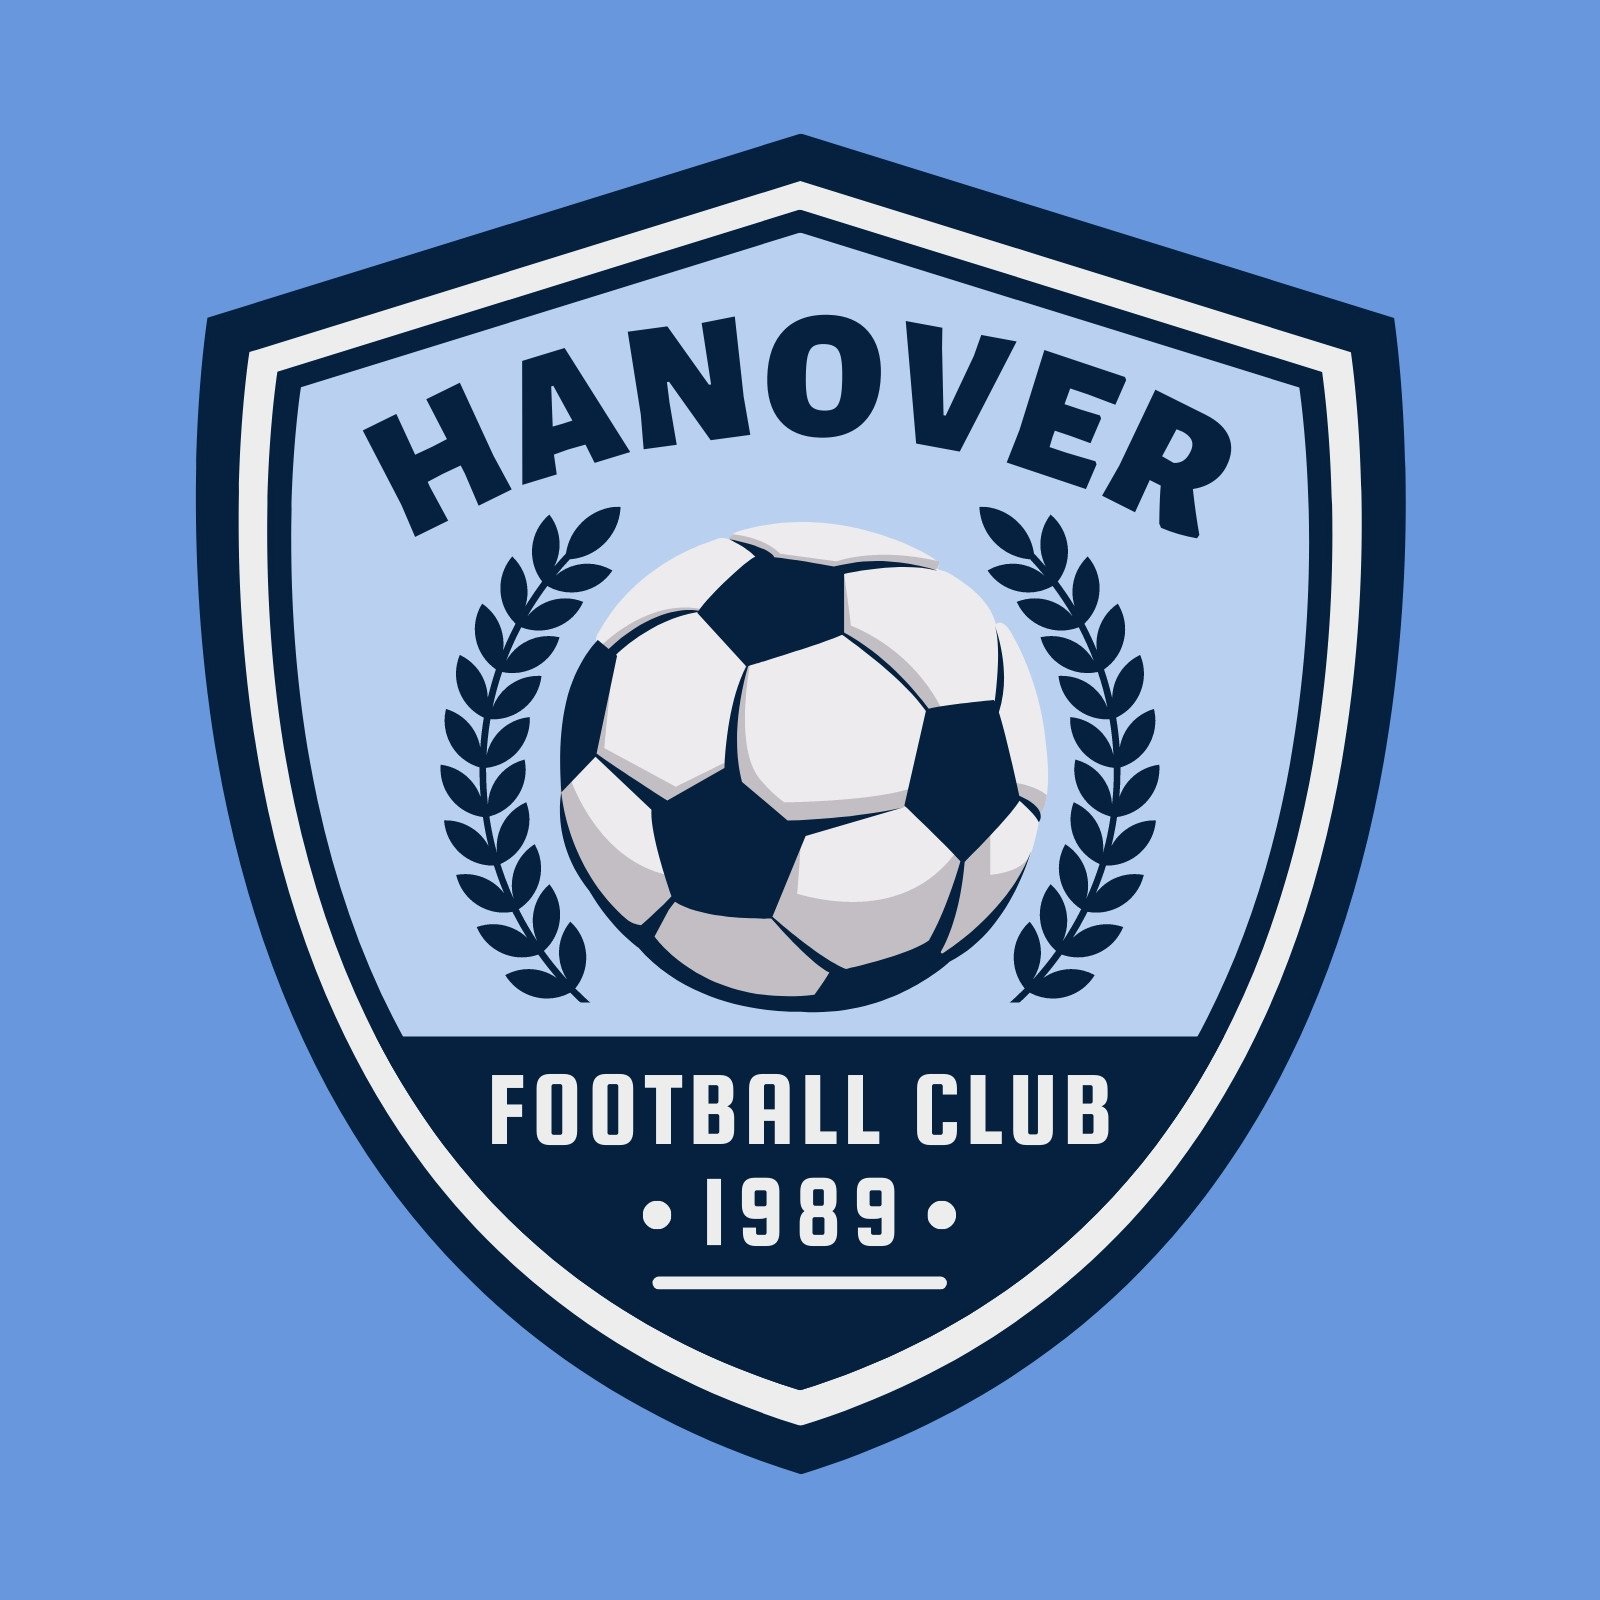 Customize 286+ Football Logo Templates Online - Canva